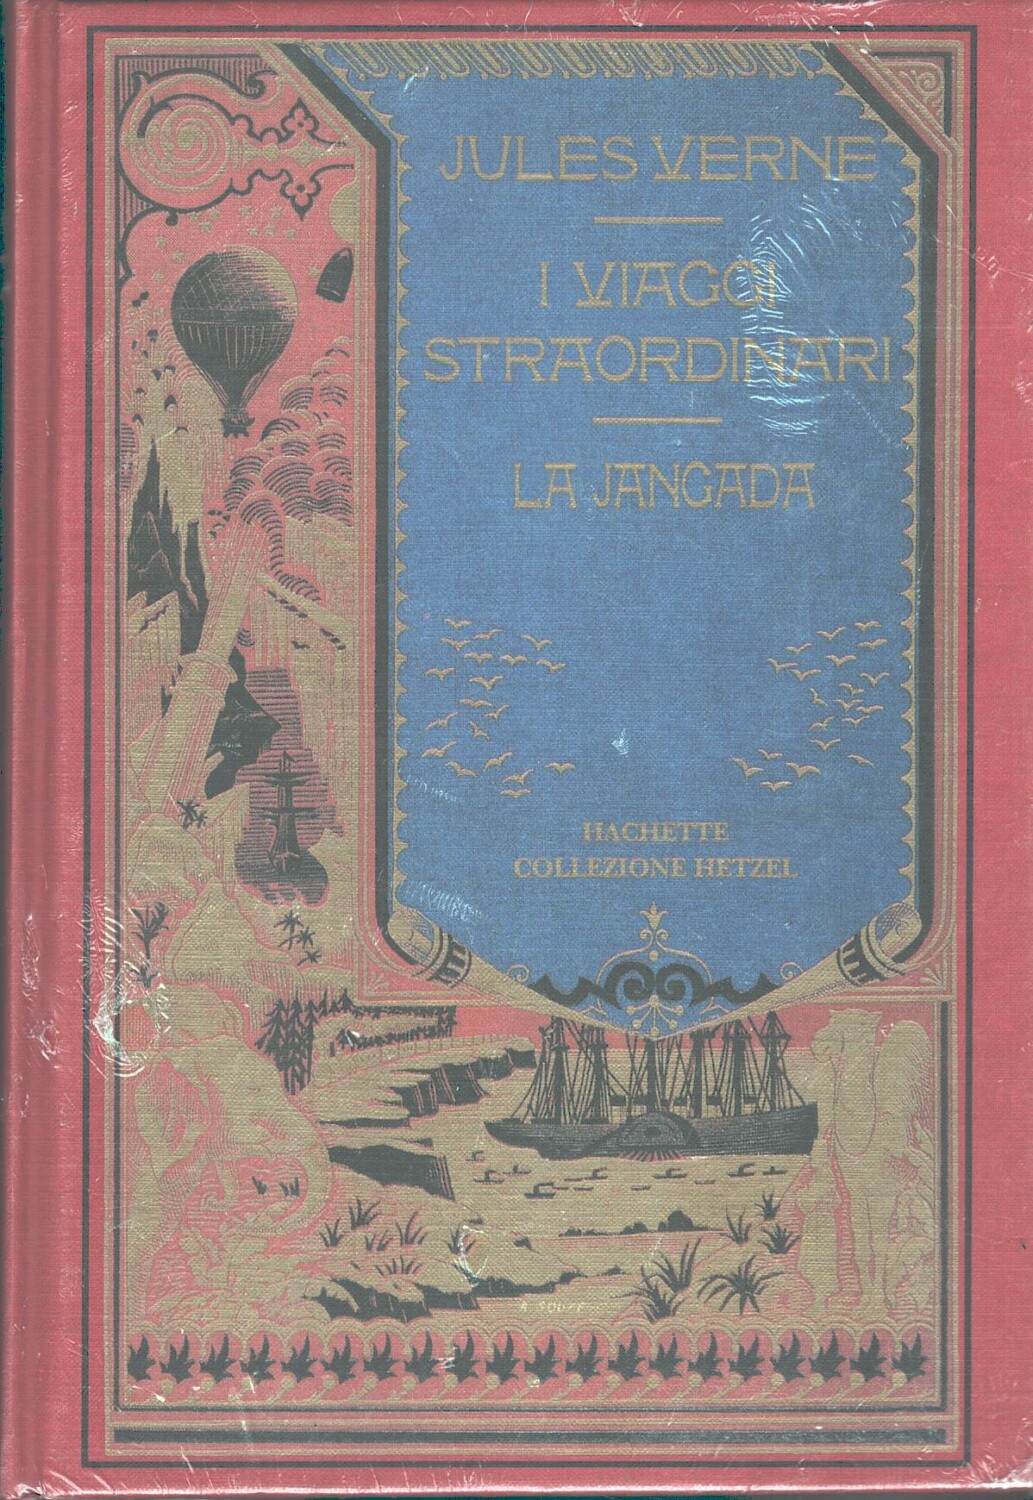 La Jangada di Jules Verne - I viaggi straordinari ed. Hachette Hetzel